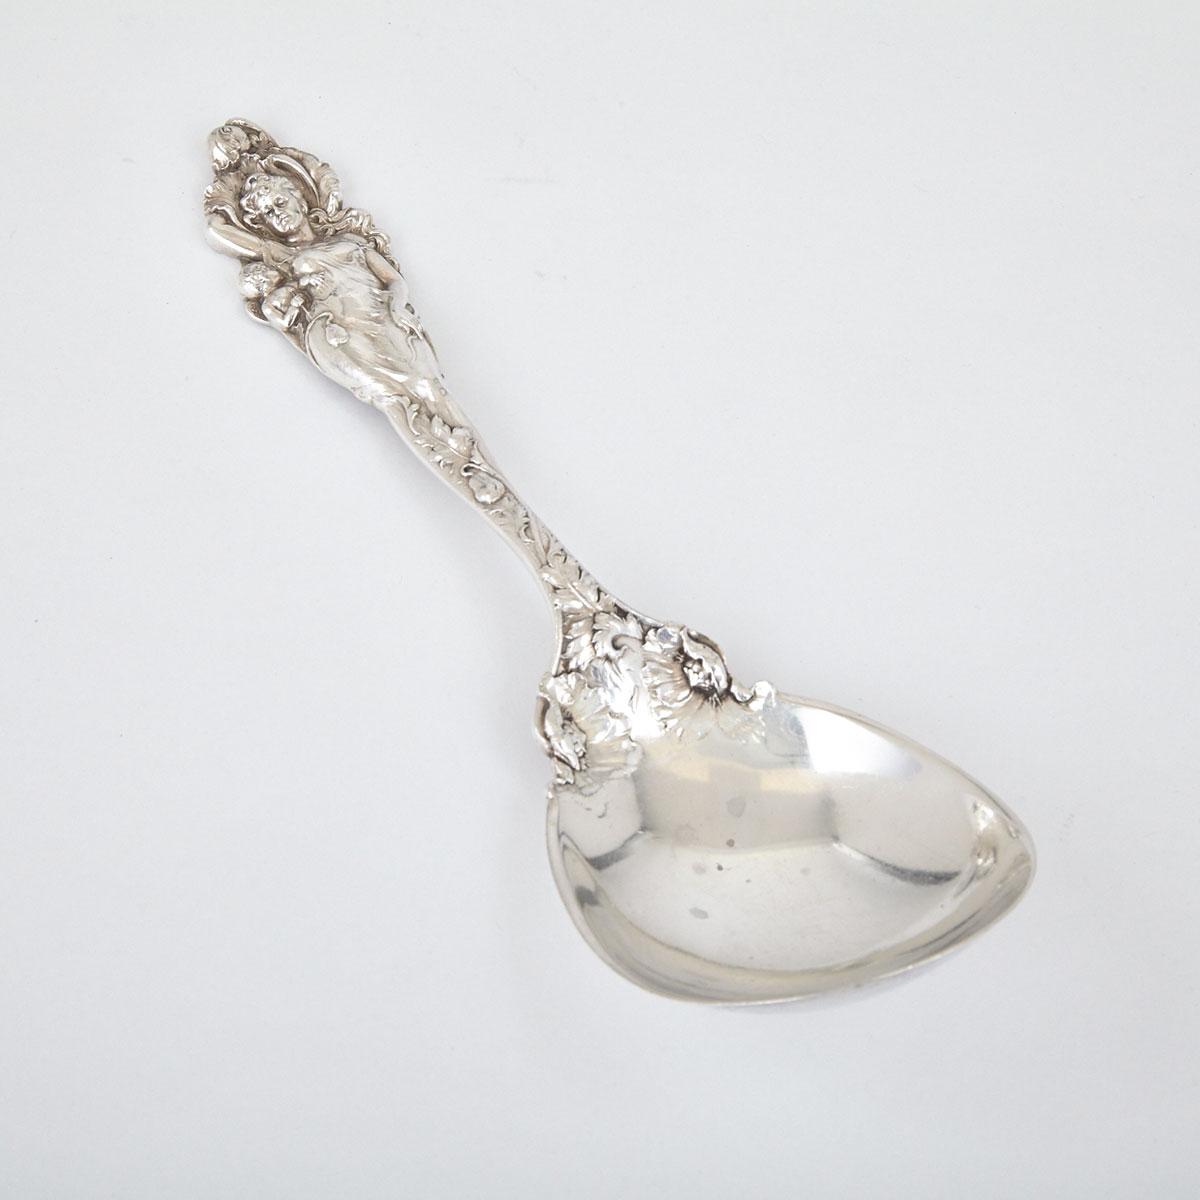 American Silver ‘Love Disarmed’ Pattern Berry Spoon, Reed & Barton, Taunton, Mass., c.1900